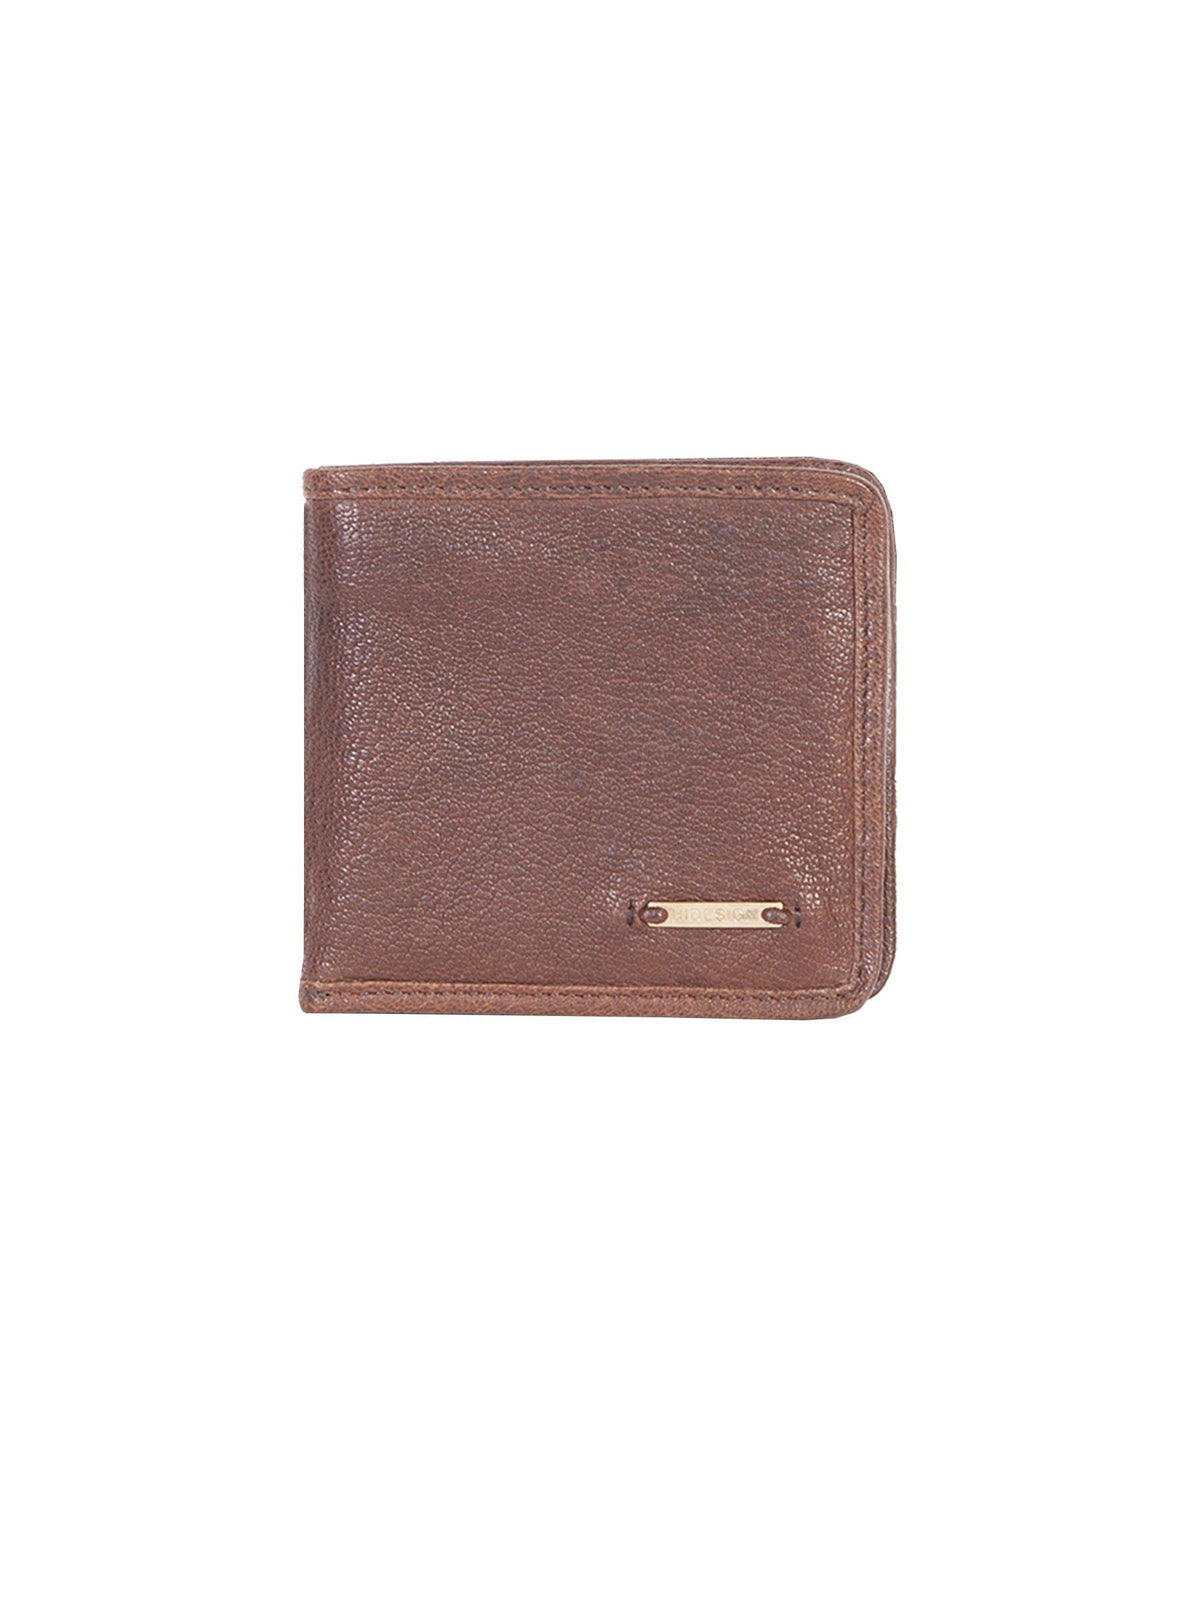 Scully Berkeley leather bi-fold wallet - Flyclothing LLC